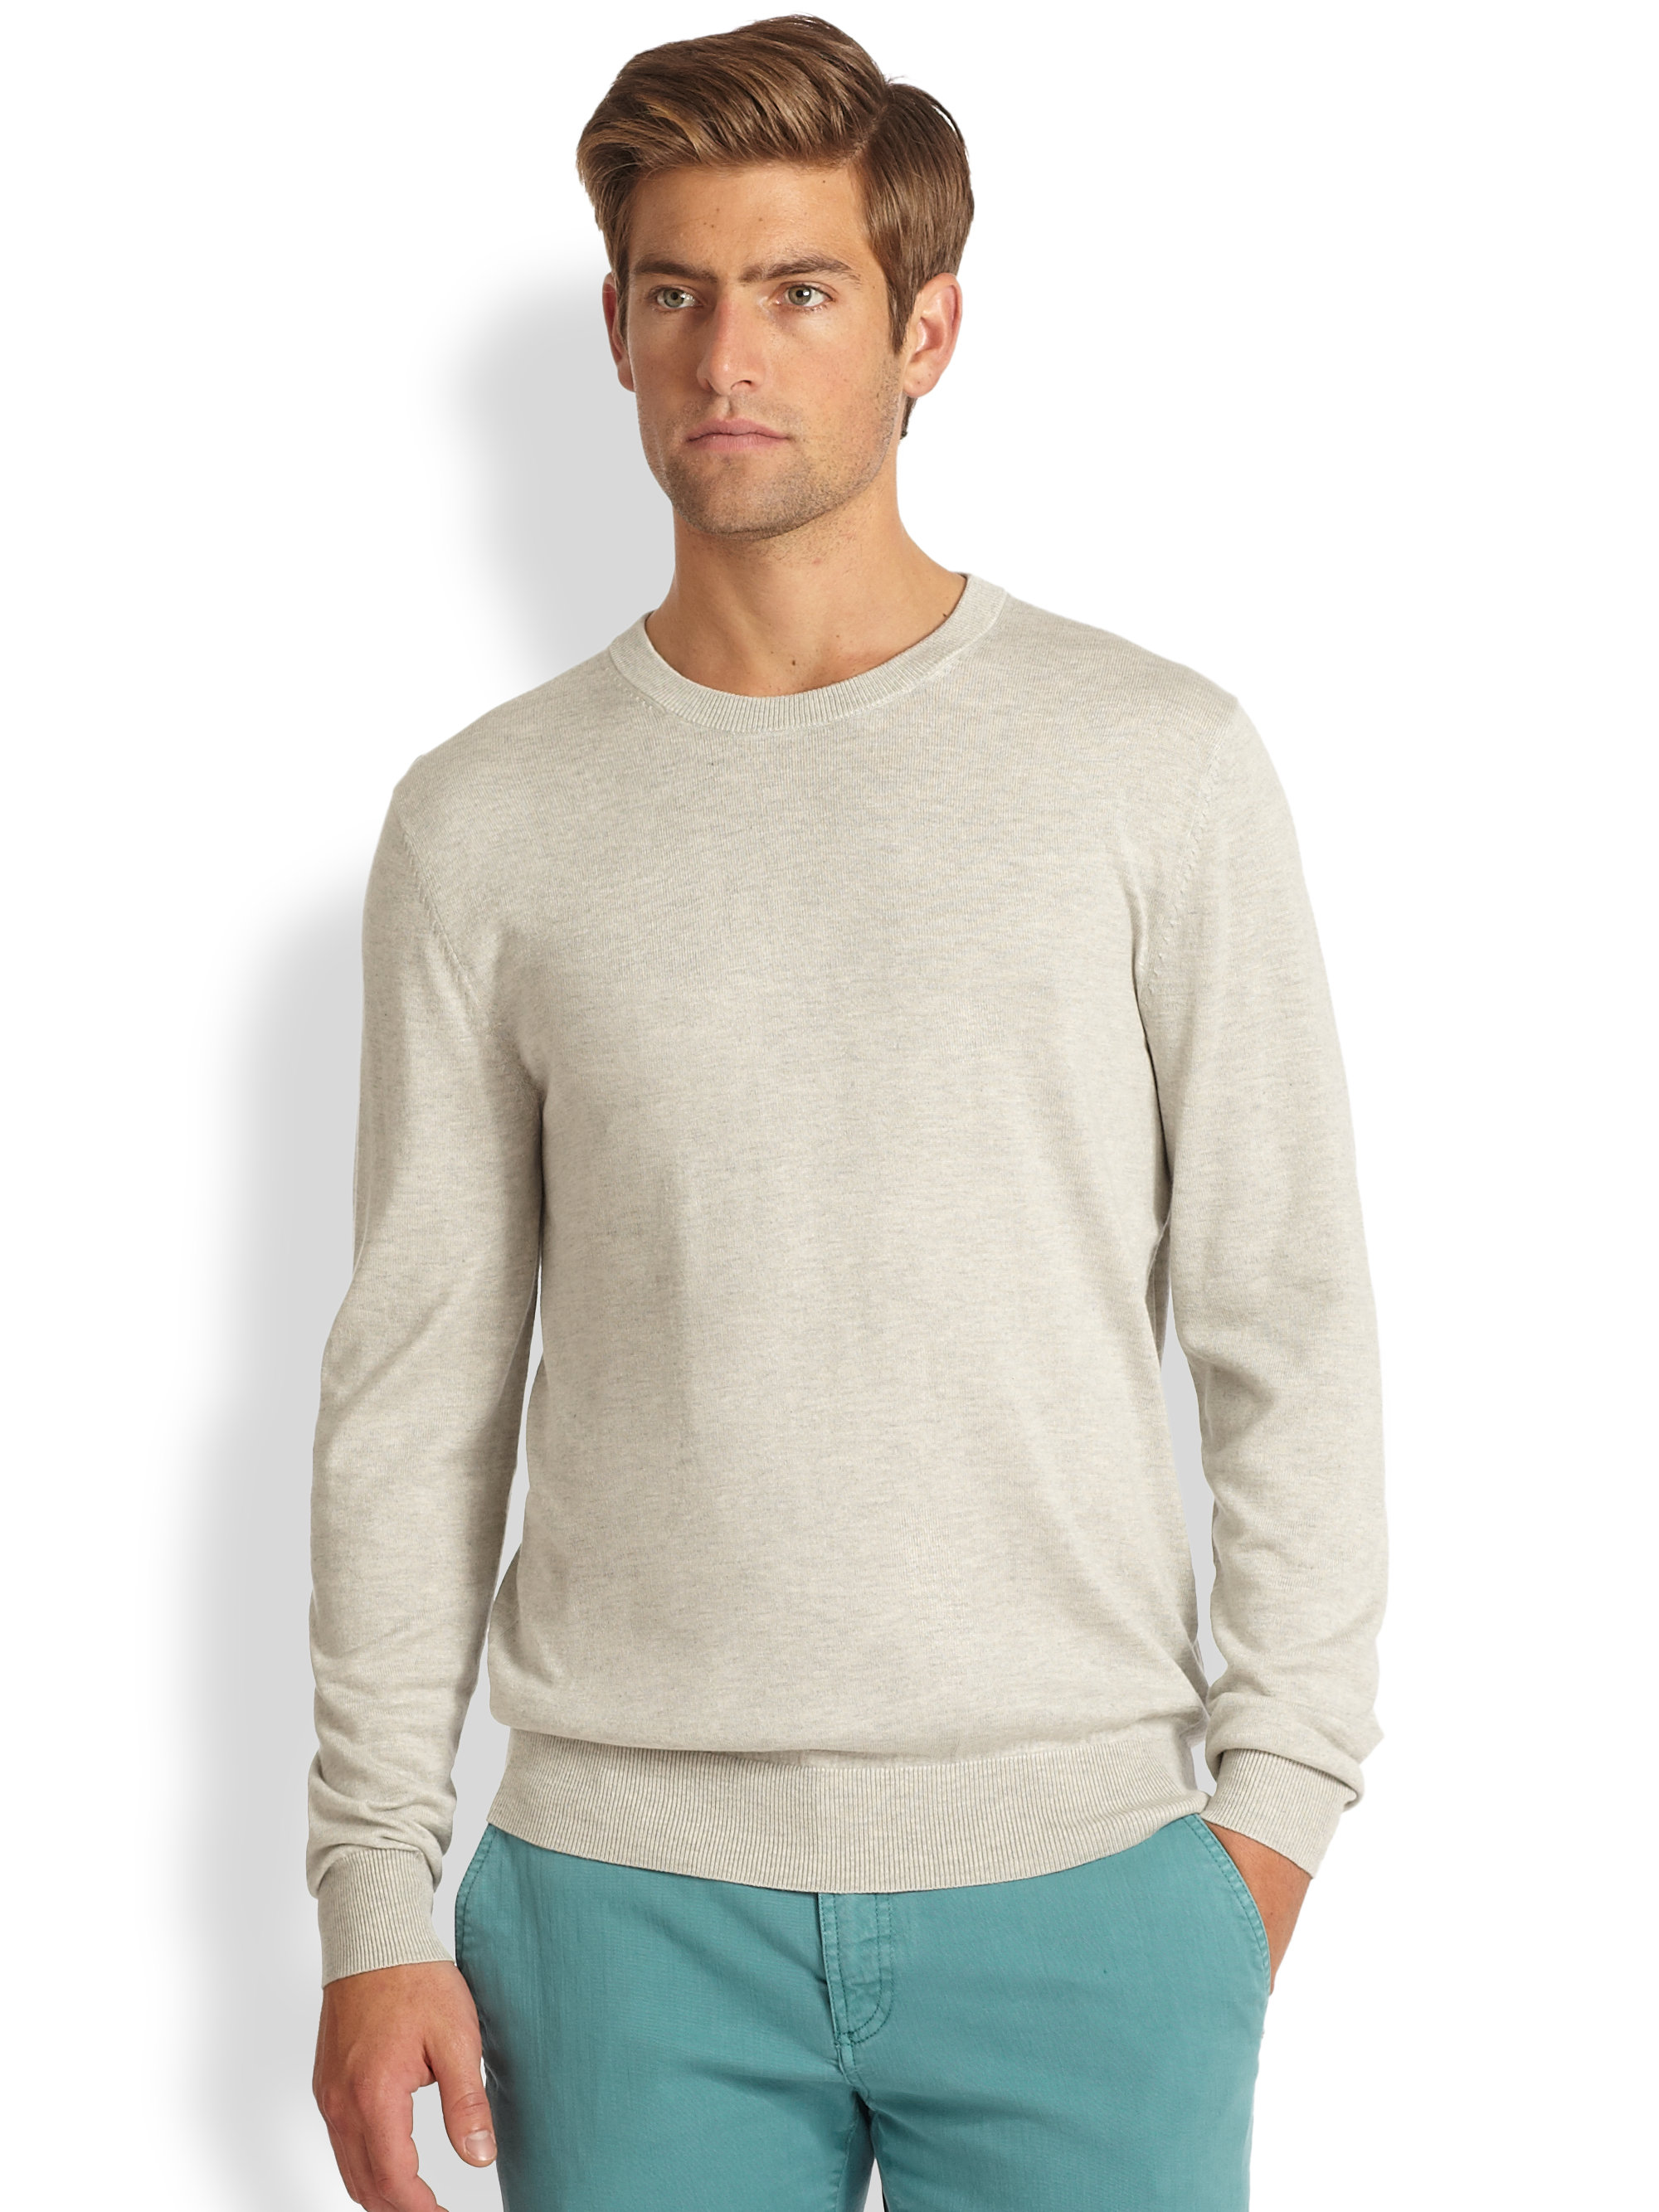 Cashmere sweater grey marled